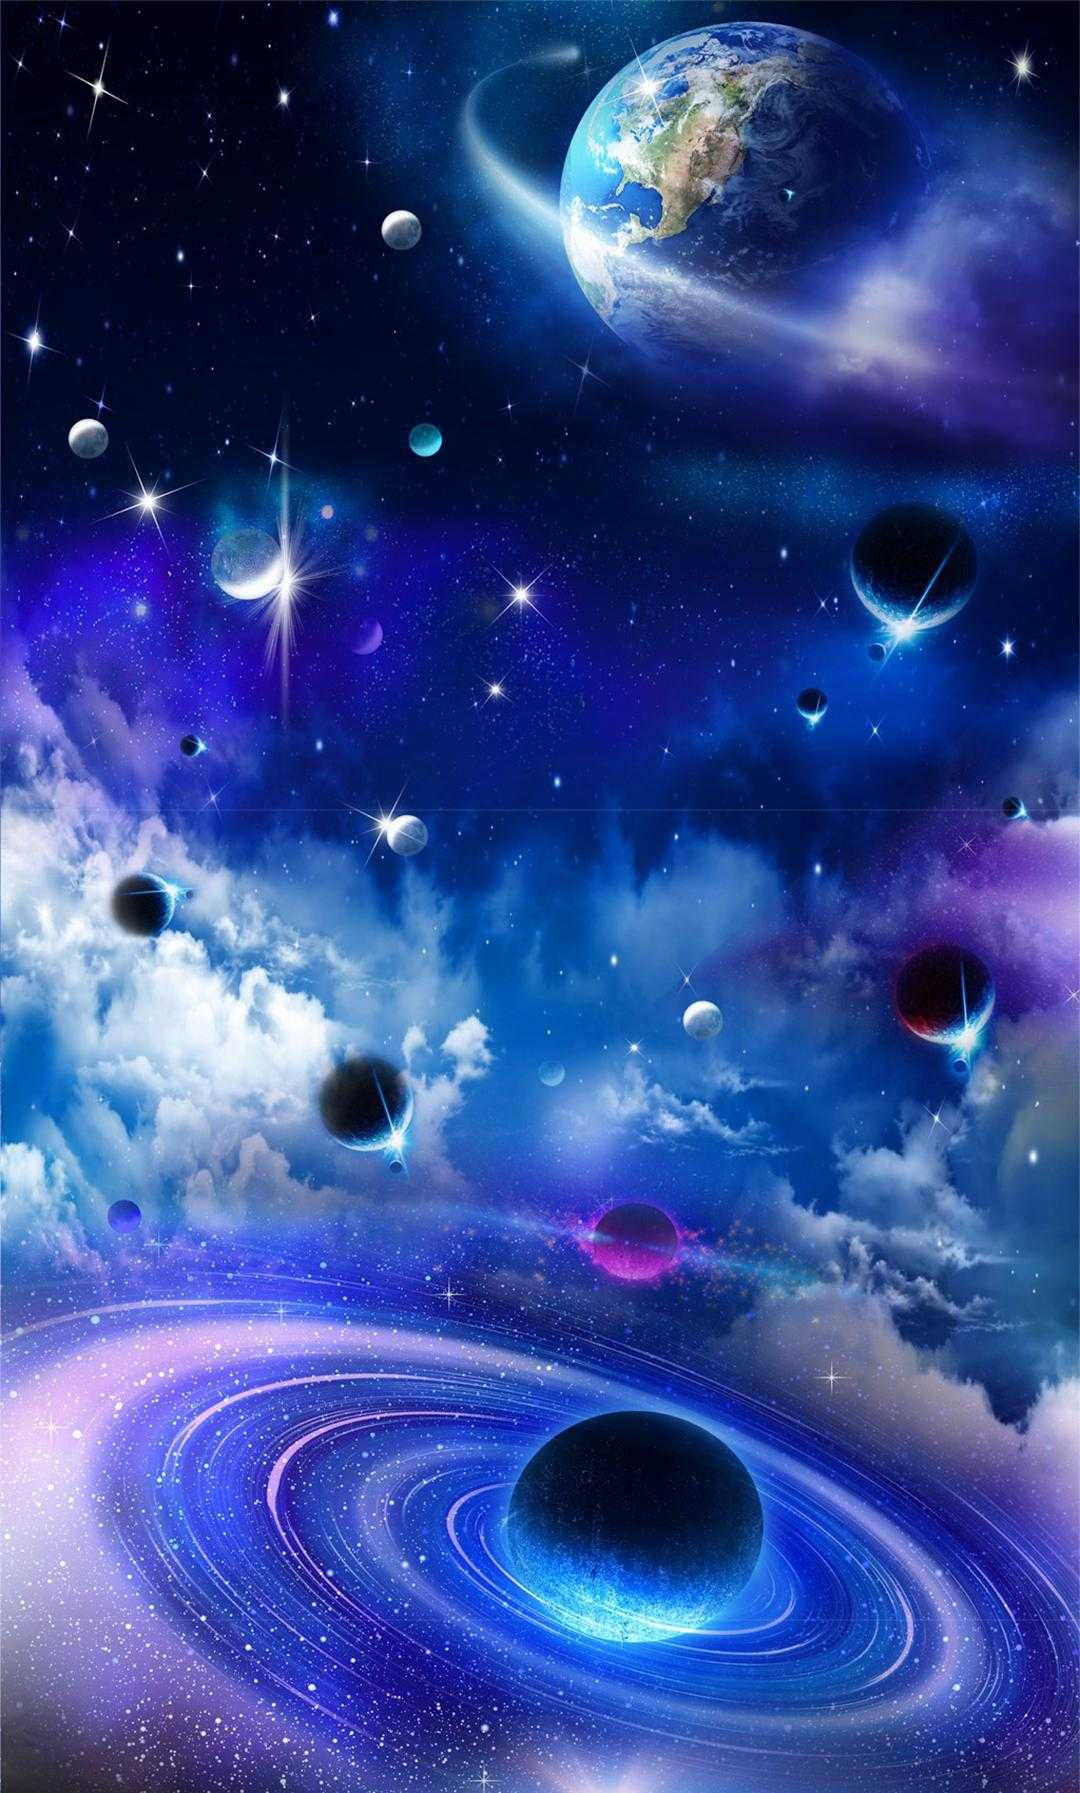 Infinity Nature iPhone 7 Wallpaper [750x1334] | Galaxy wallpaper, Night sky  wallpaper, Sky aesthetic